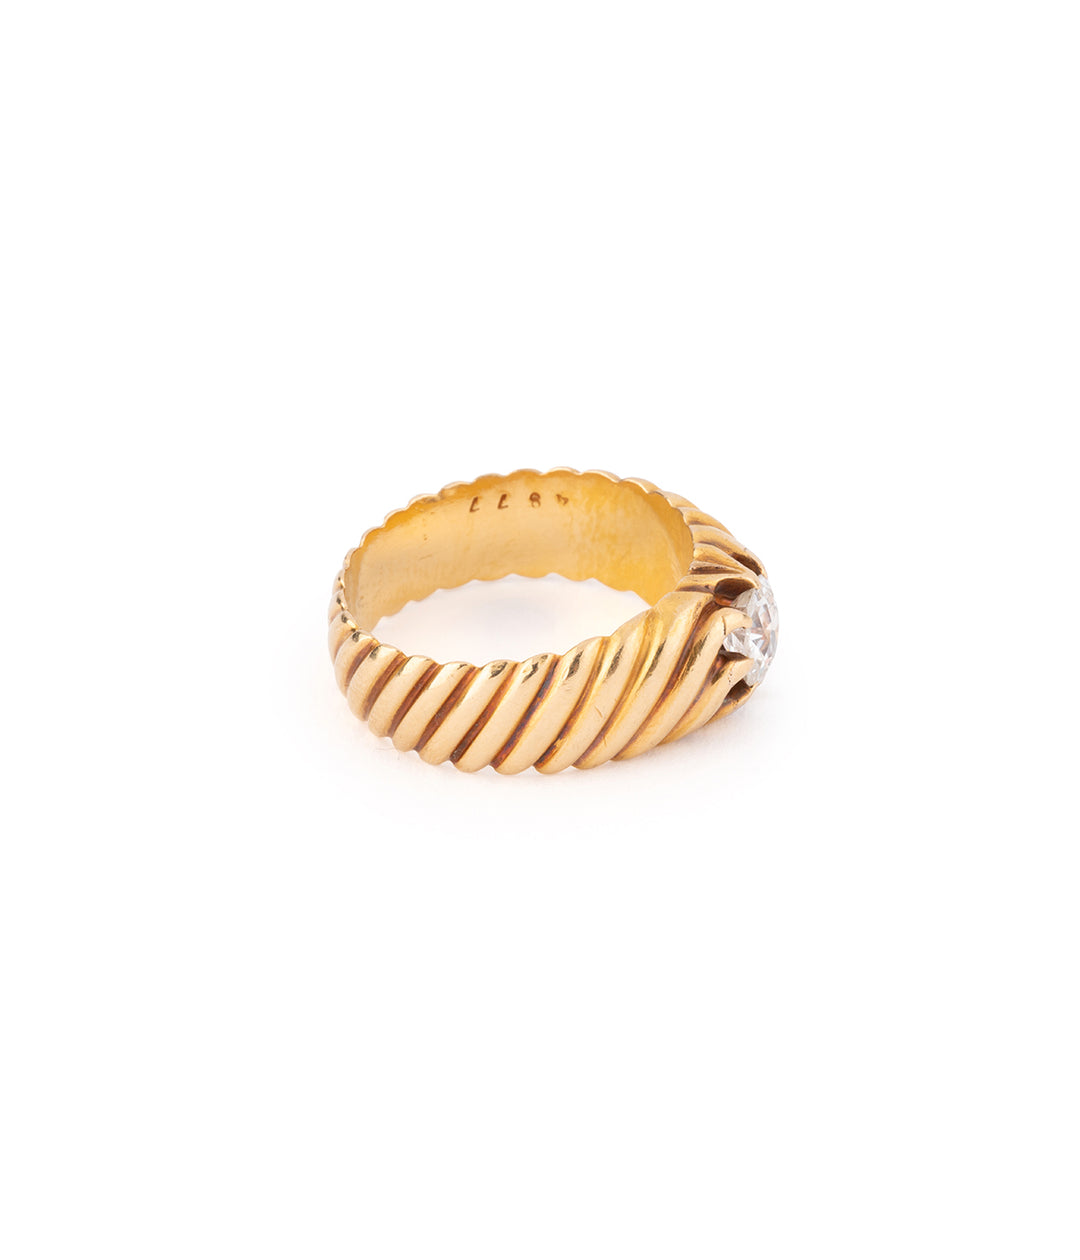 Antique diamond gold band ring "Avak" - Caillou Paris